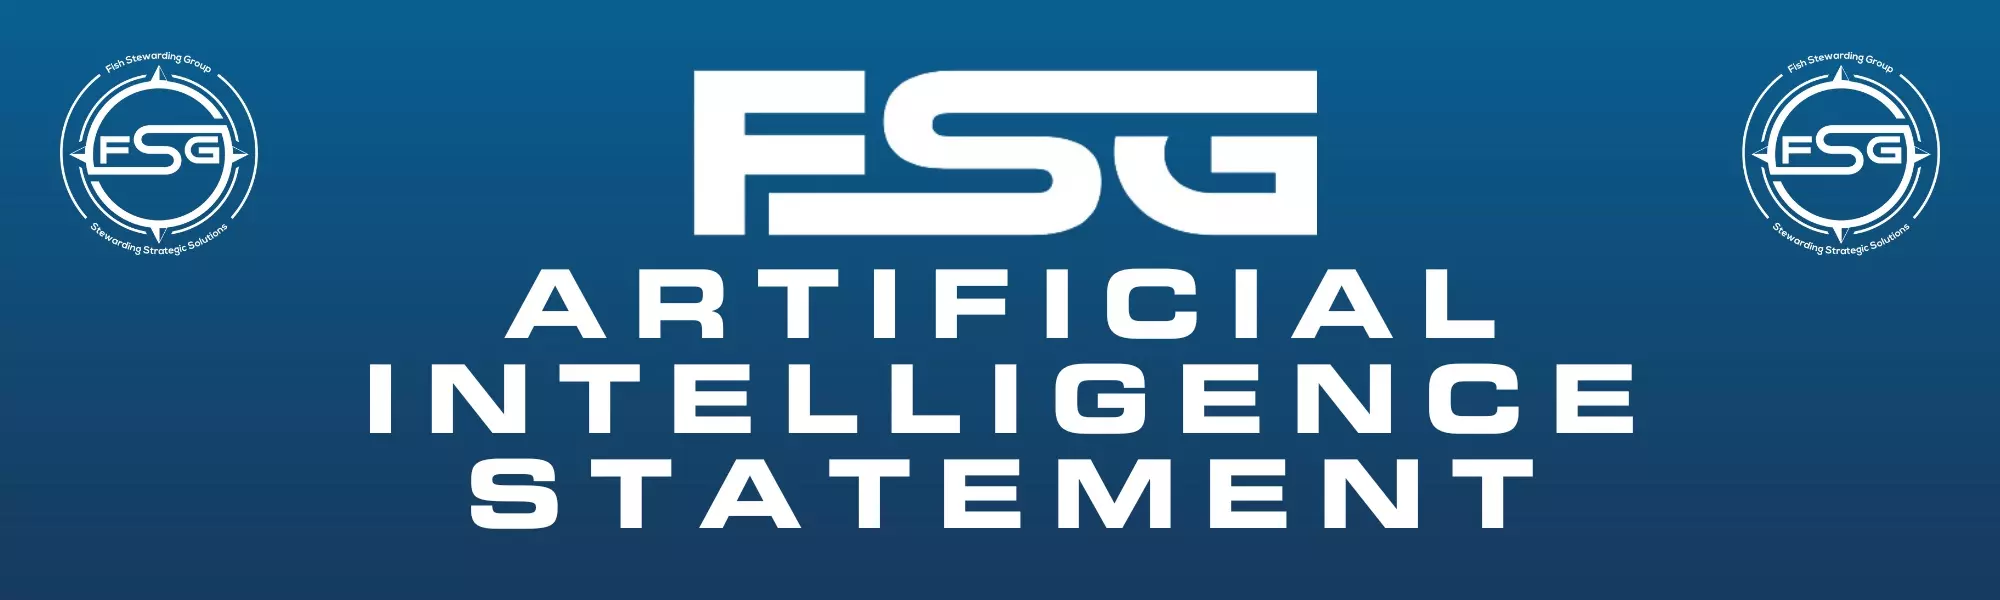 FSG artificial intelligence statement graphic